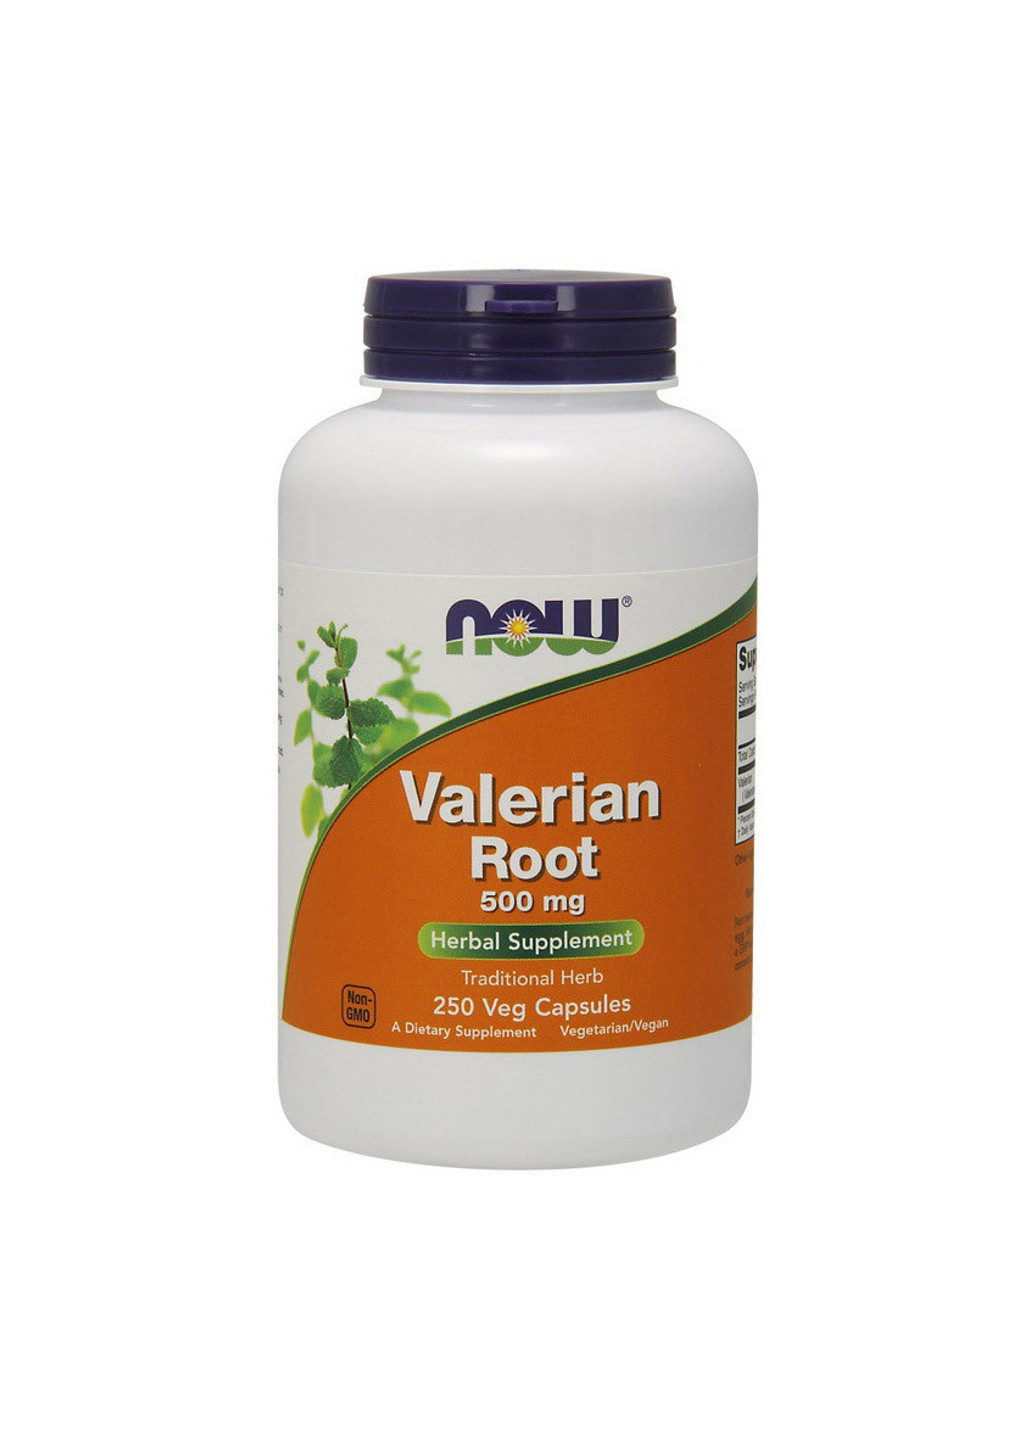 Корень валерианы экстракт Valerian Root 500 mg (250 капс) нау фудс Now Foods (255408997)